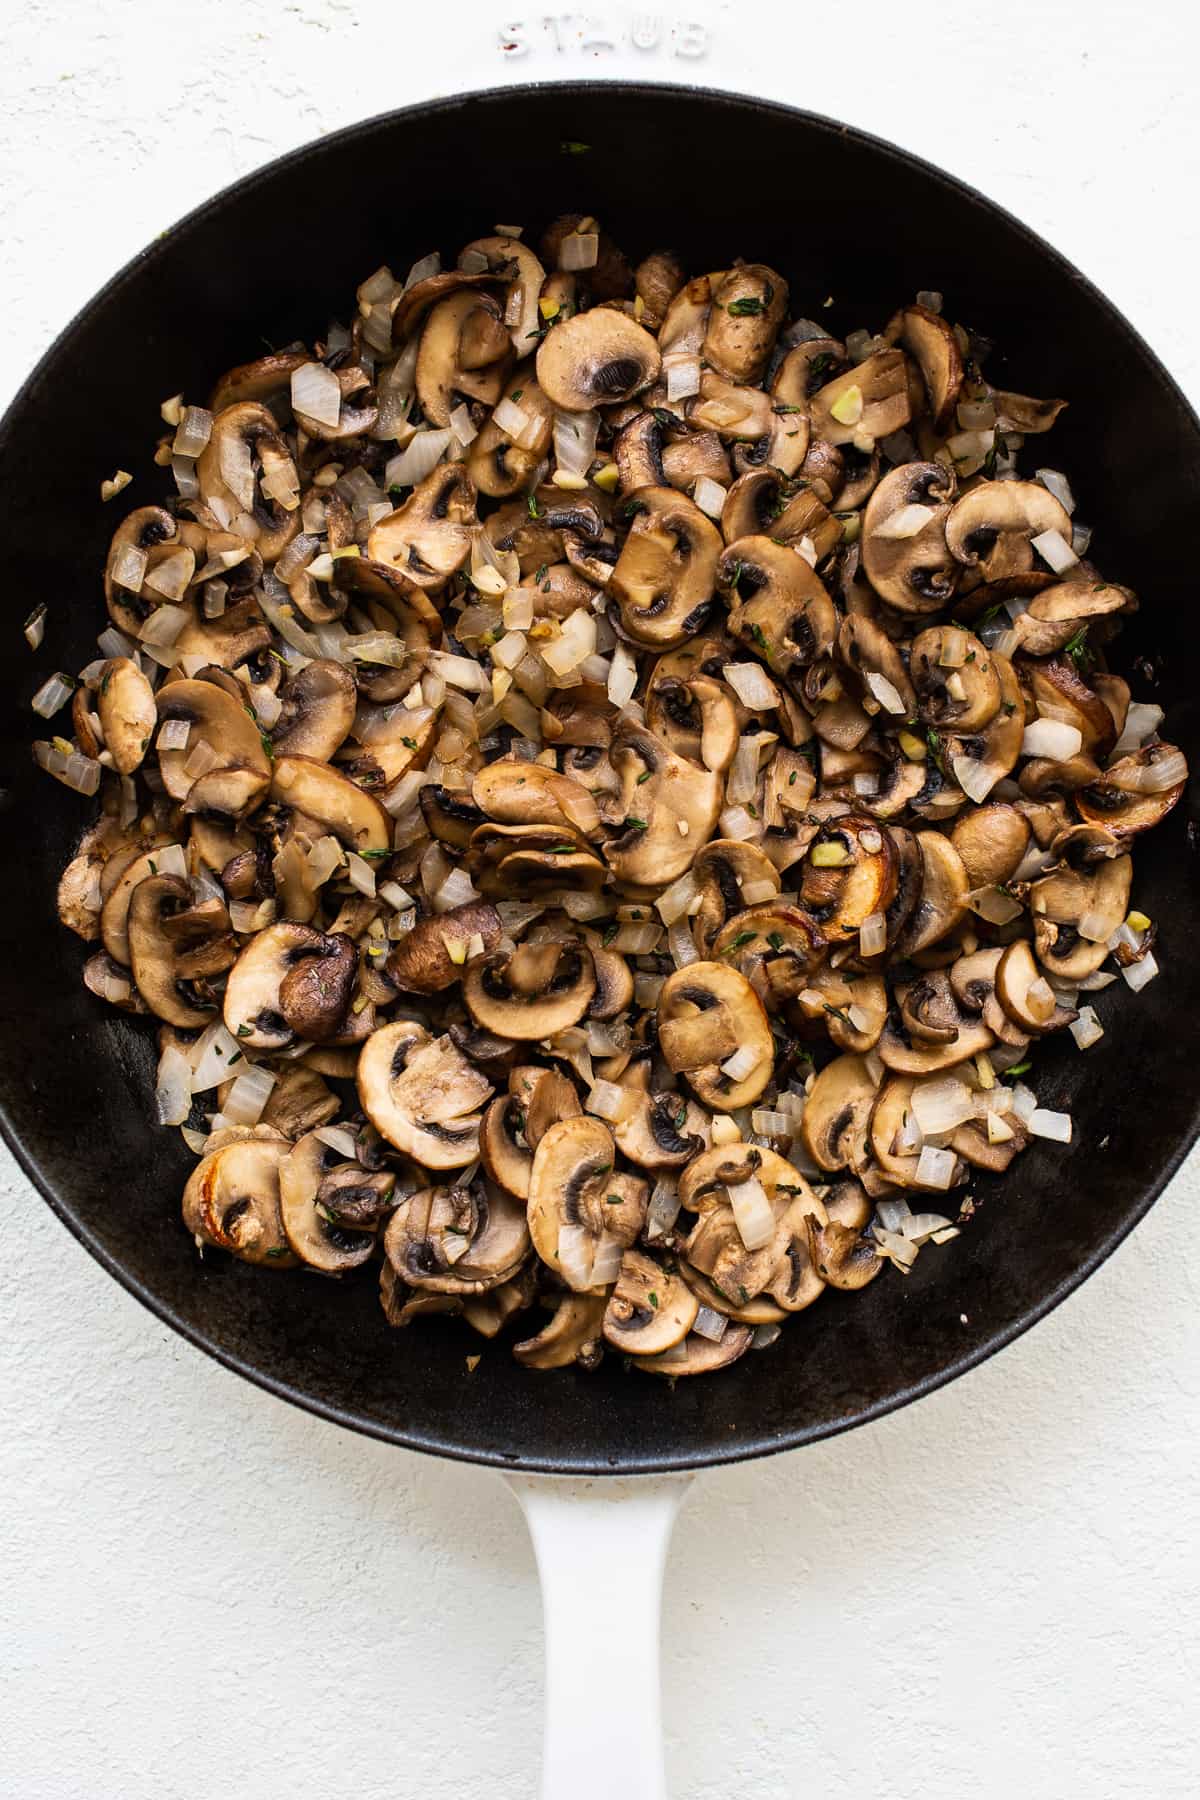 caramelized mushrooms in skillet.